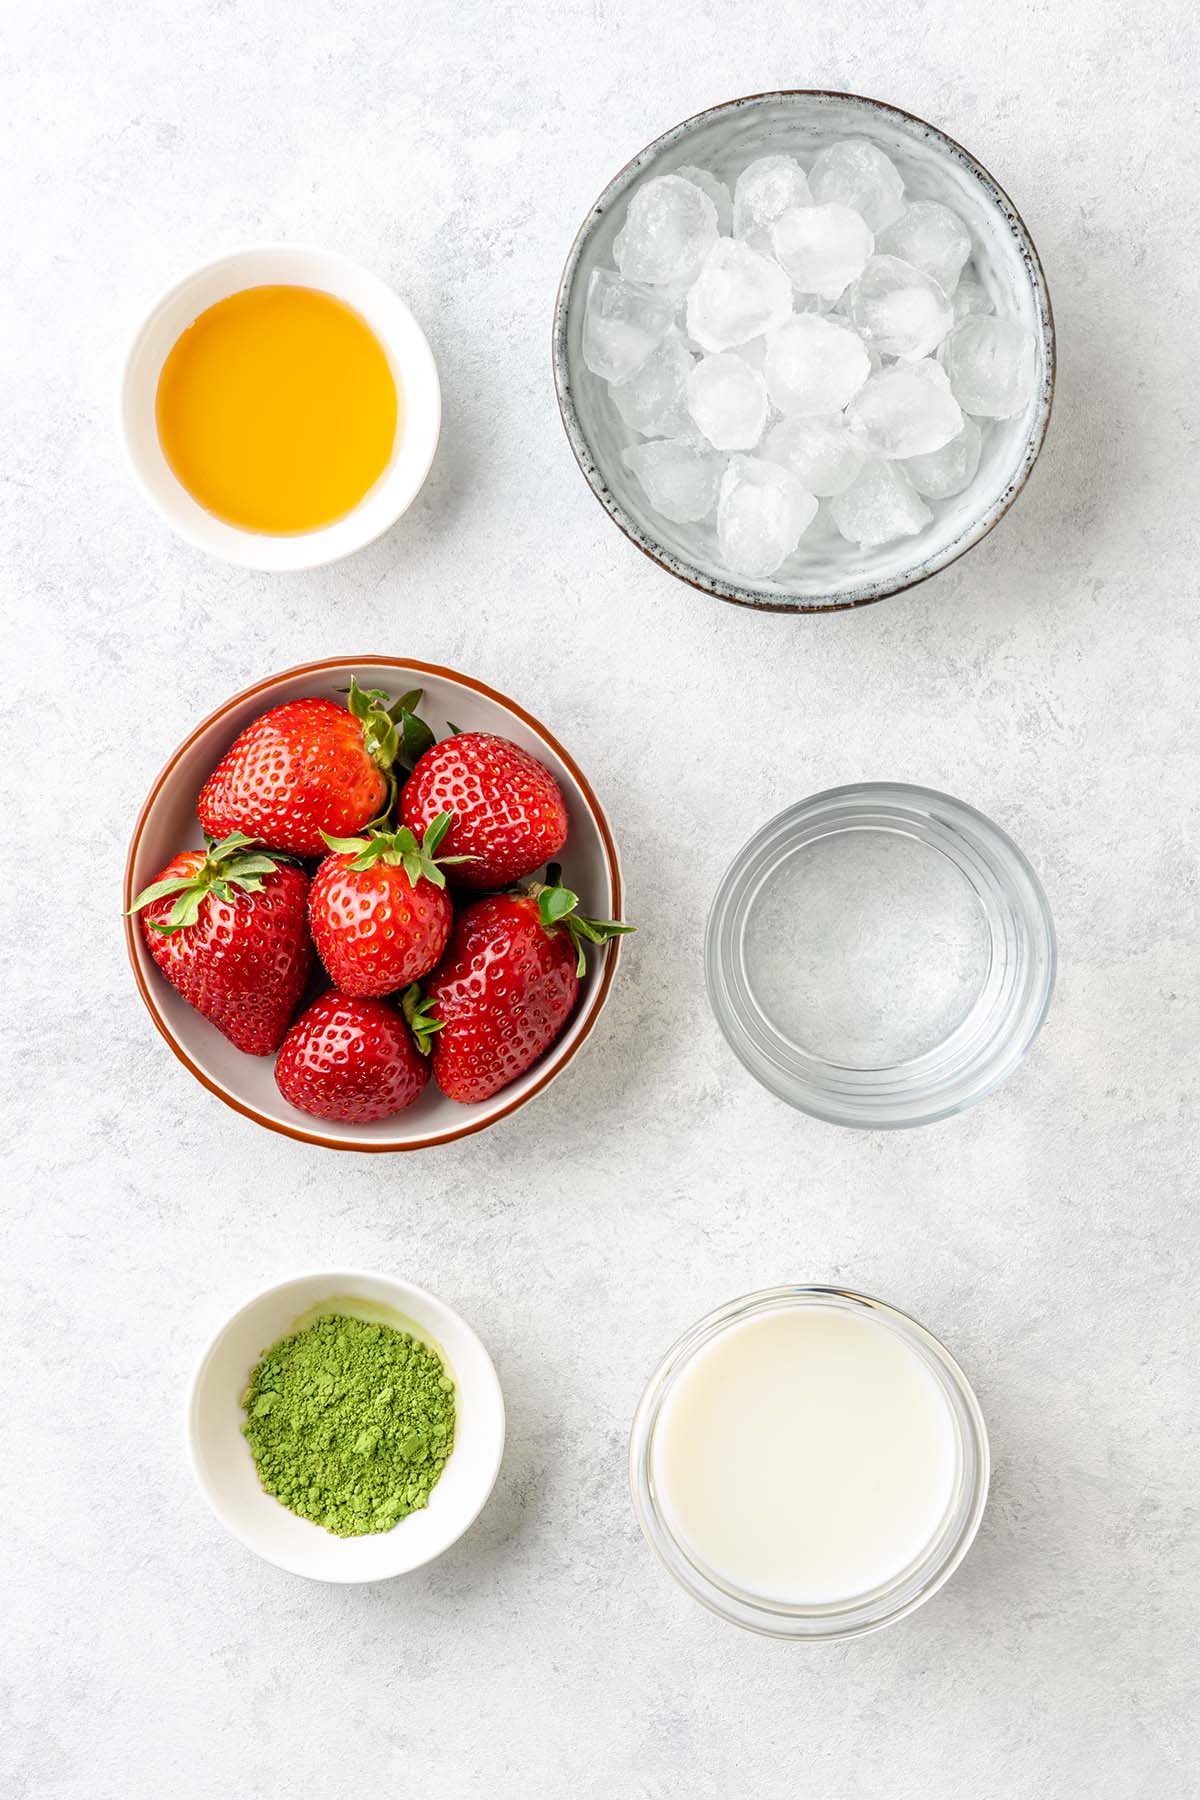 Ingredients to make strawberry matcha latte